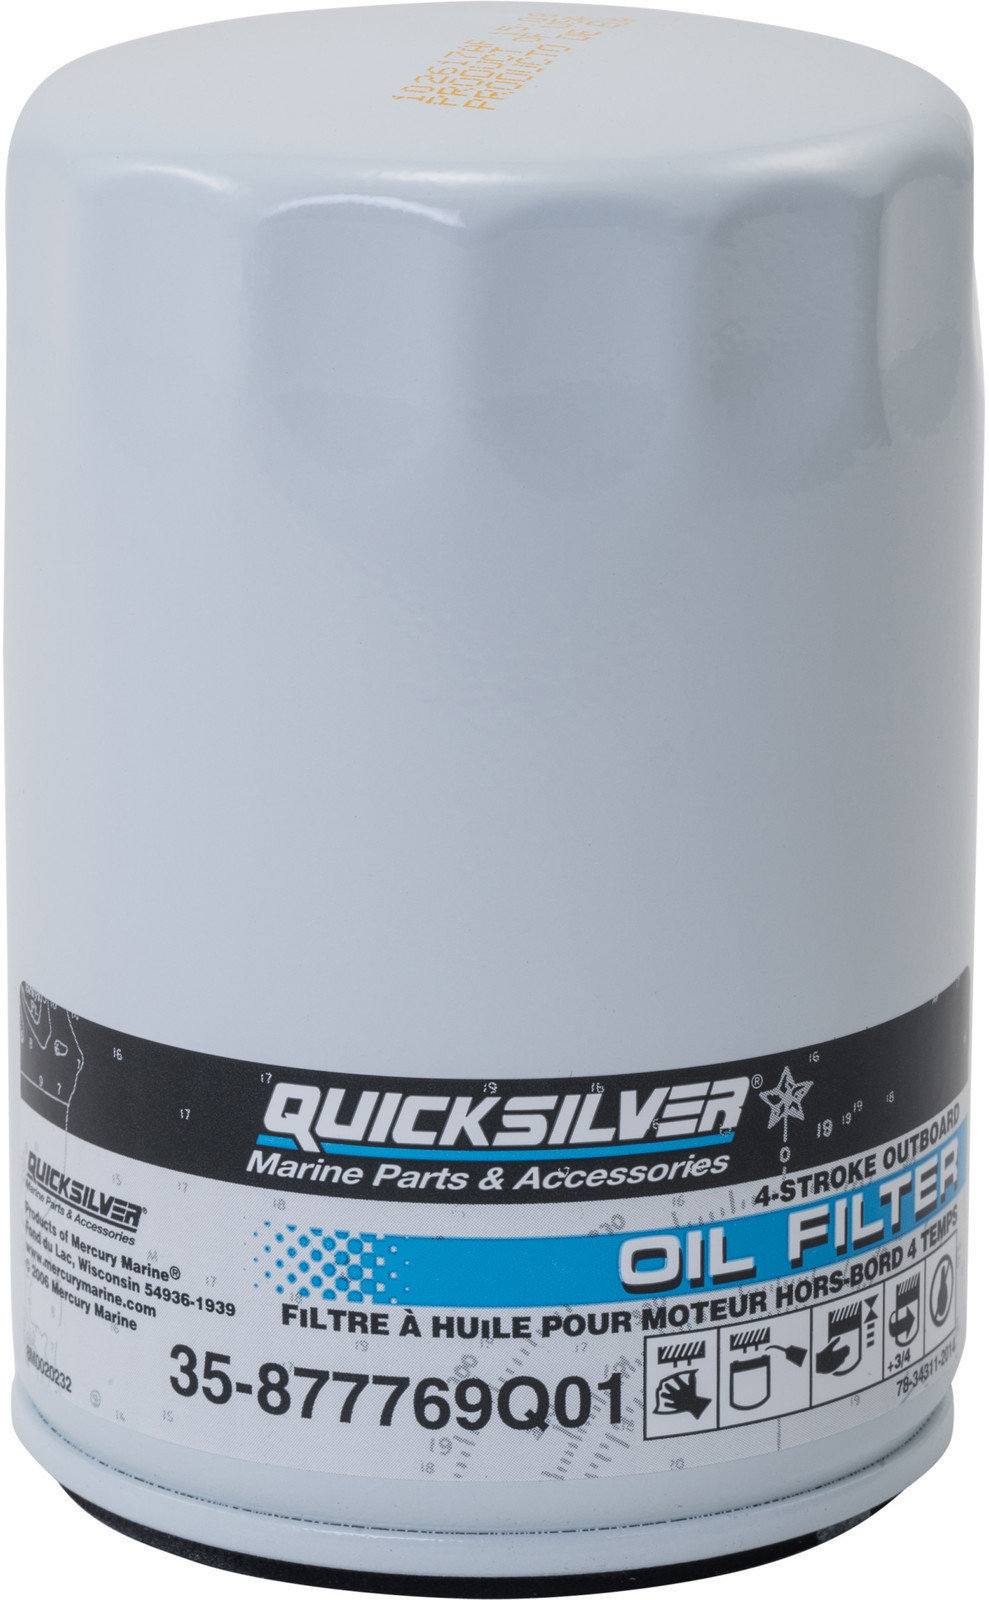 Filtr do silników zaburtowych, filtr do silników morskich Quicksilver Oil Filter 35-877769Q01